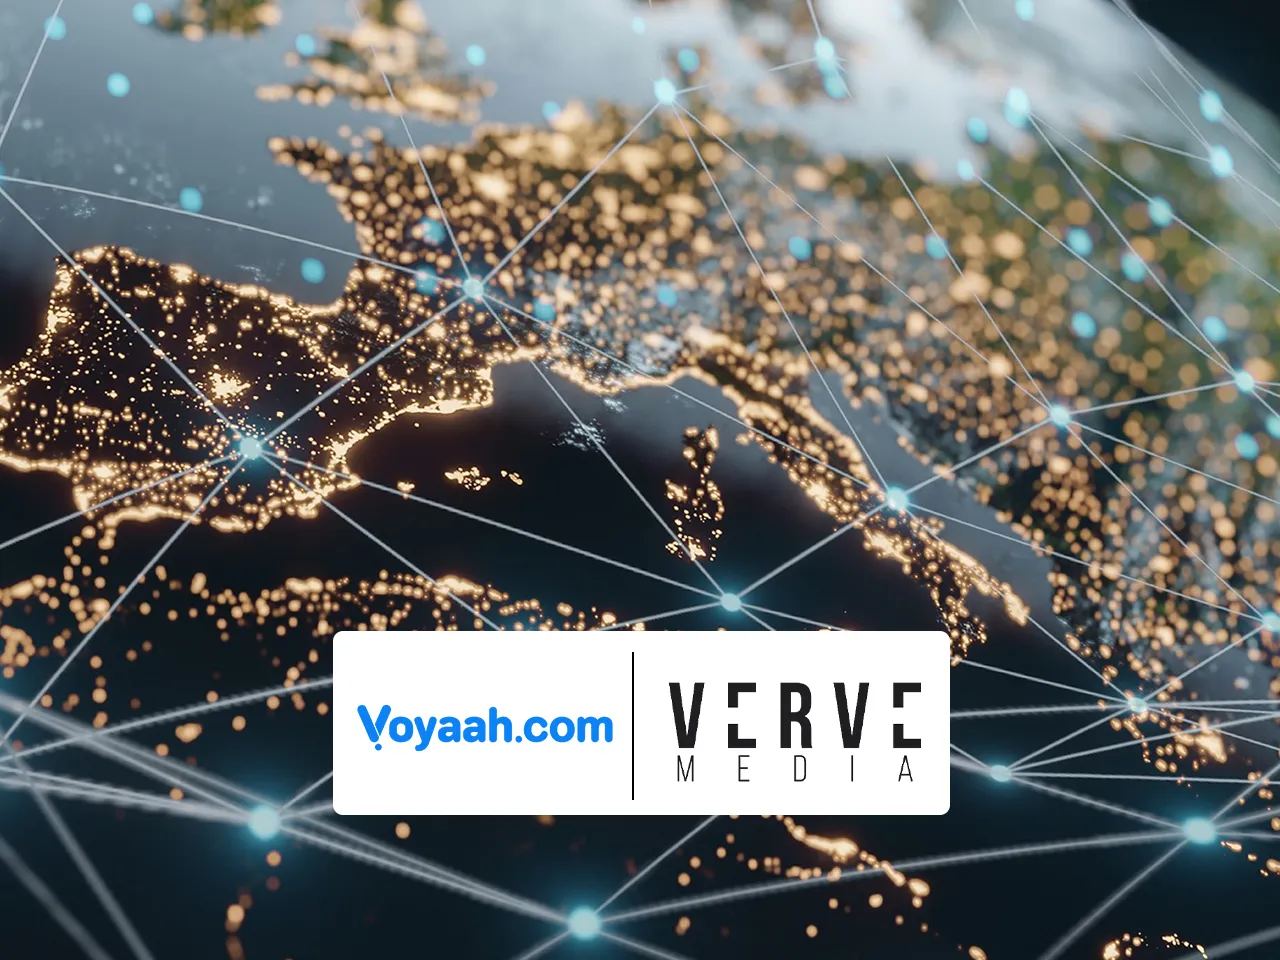 Verve Media bags digital mandate for Voyaah.com